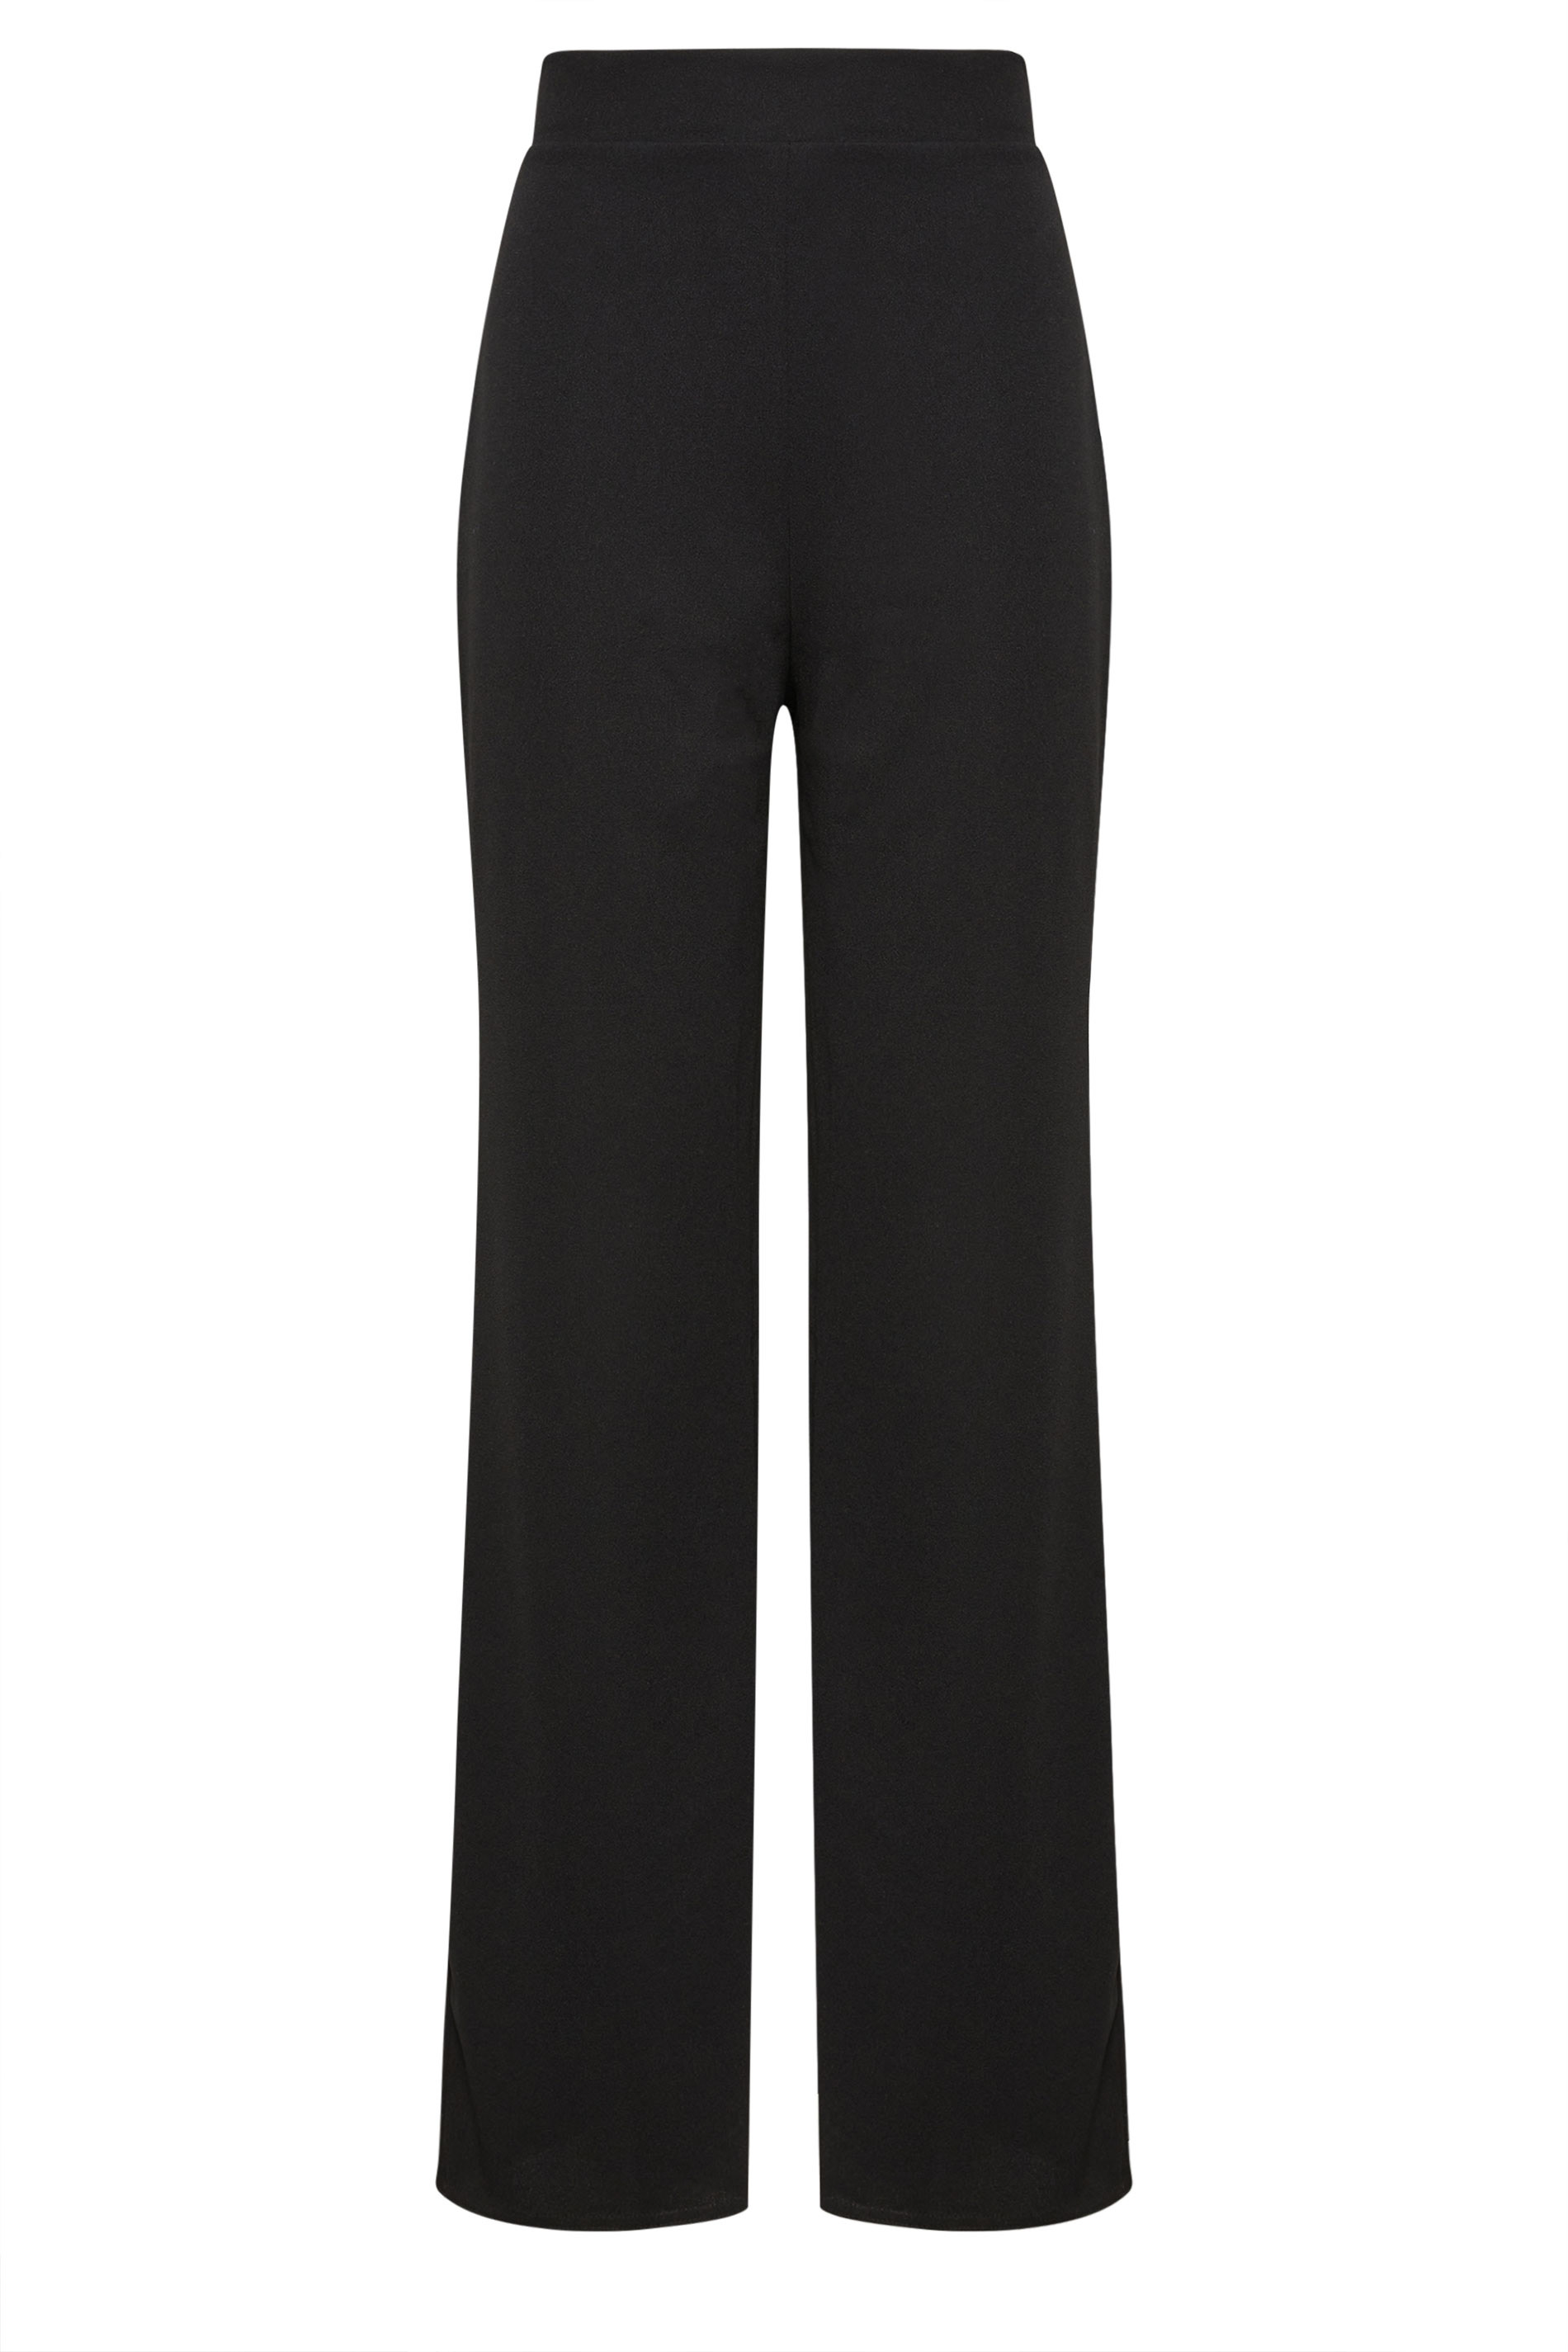 LTS Tall Black Scuba Trousers | Long Tall Sally